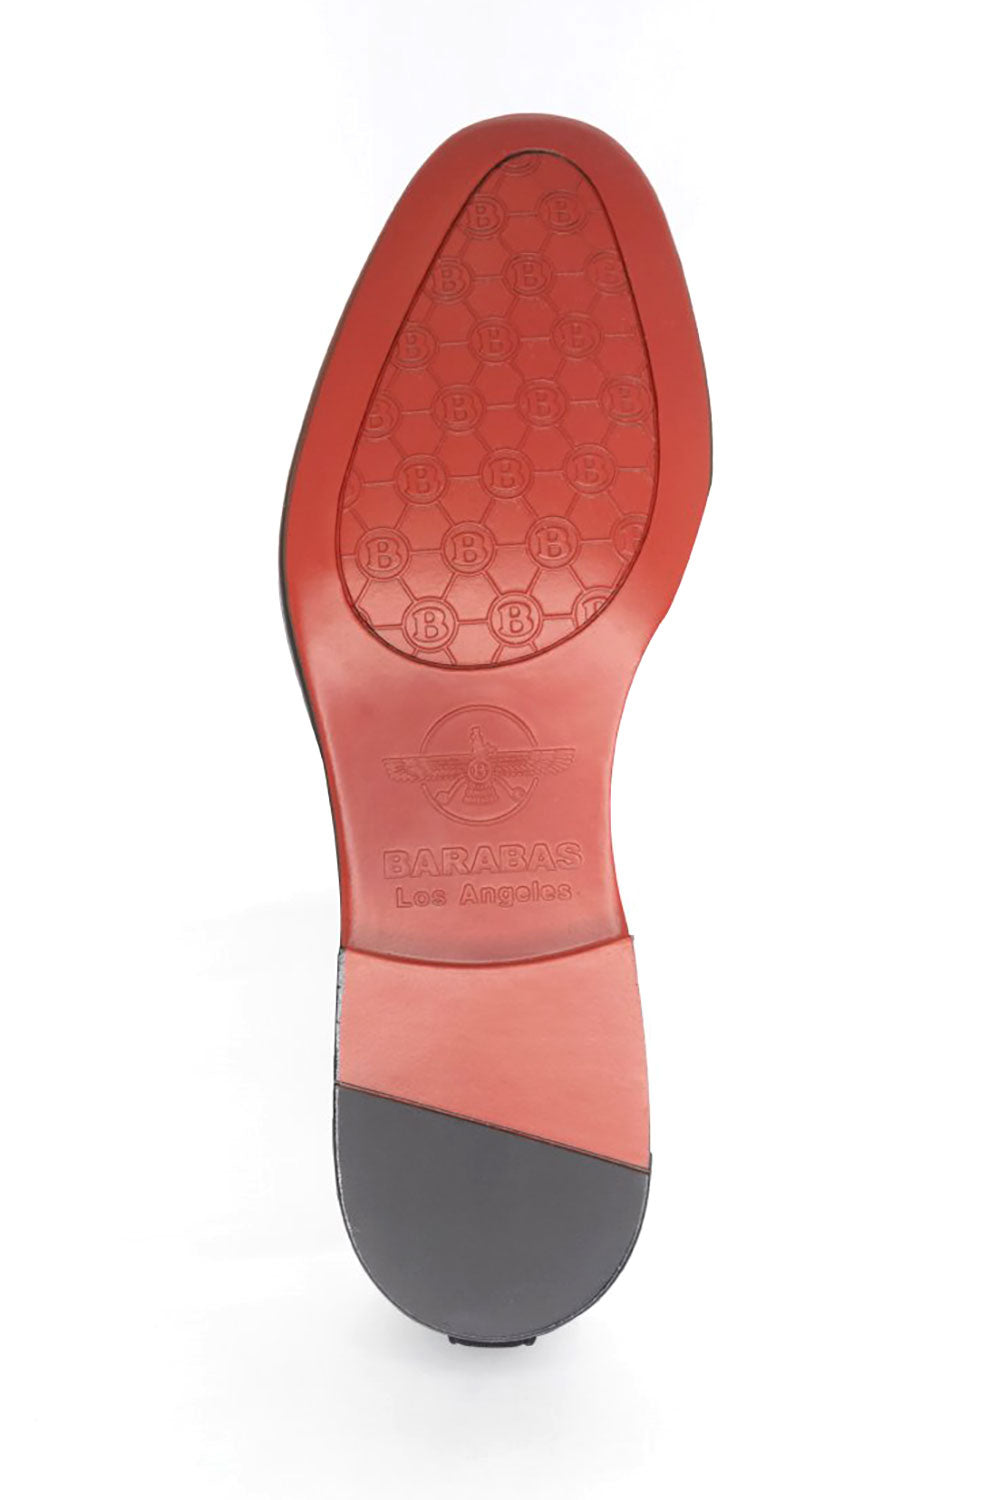 BARABAS Men's Rhinestone Sequin key Pattern Slip On Dress Shoes SH3085